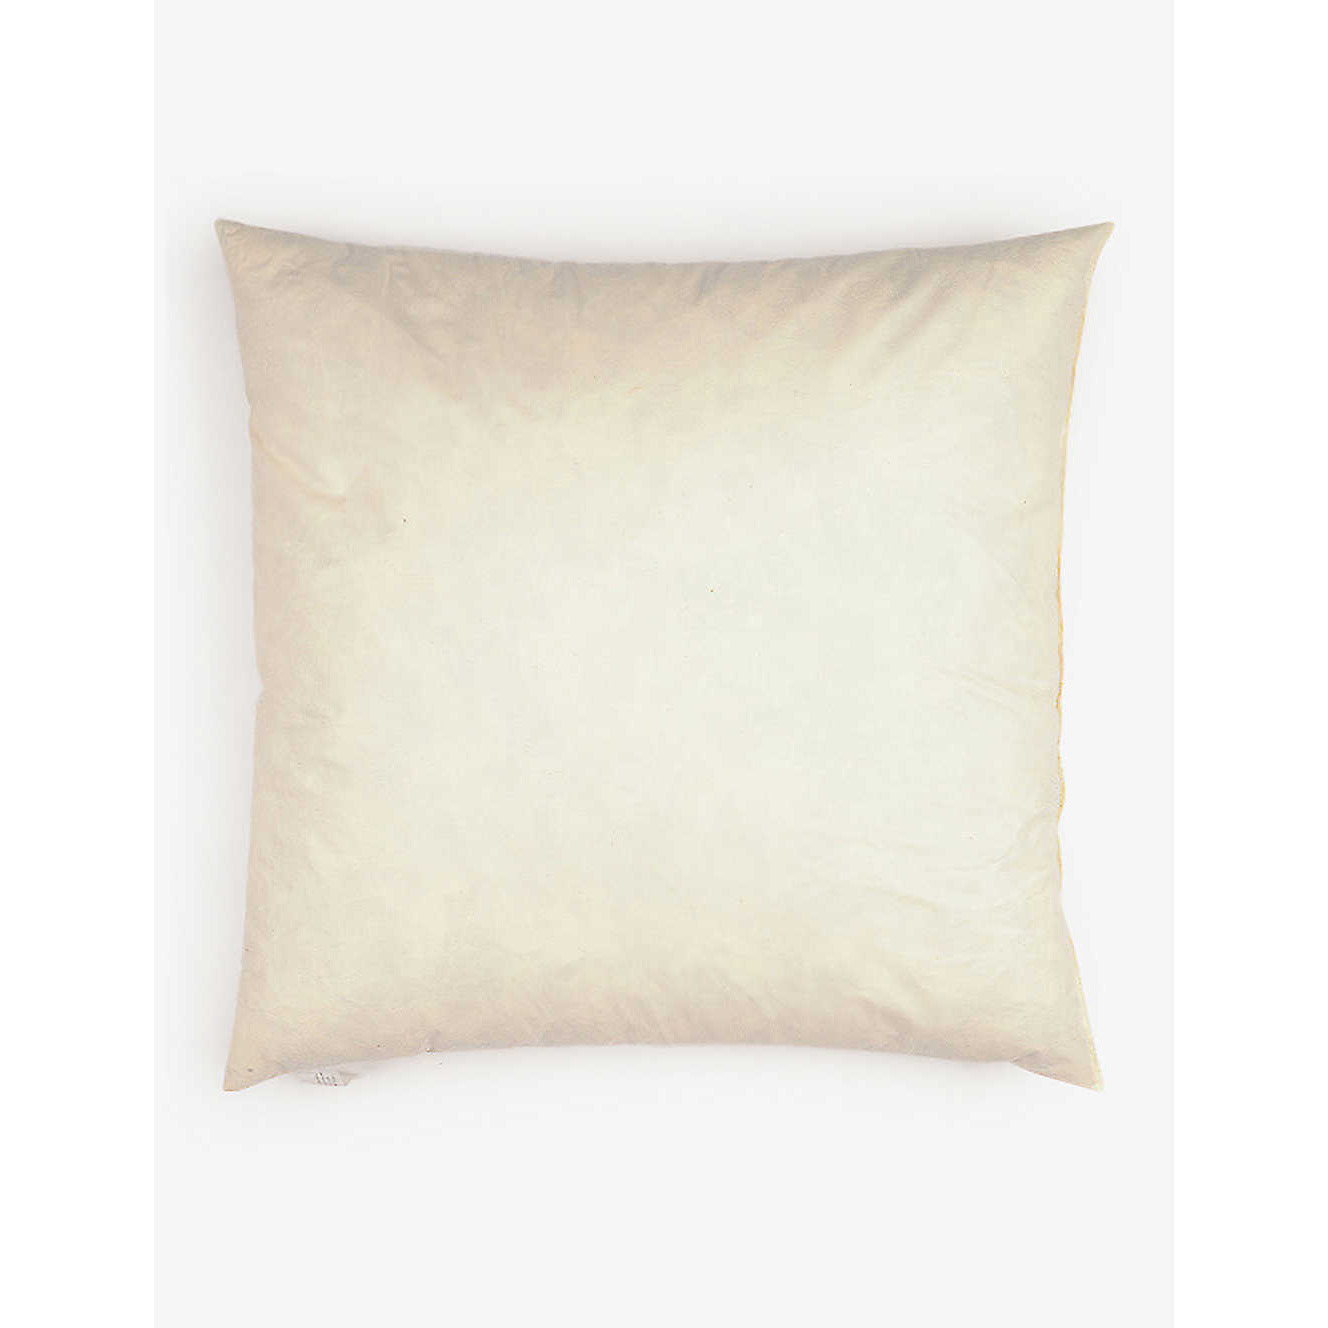 Square feather cushion pad 47.5cm x 47.5cm